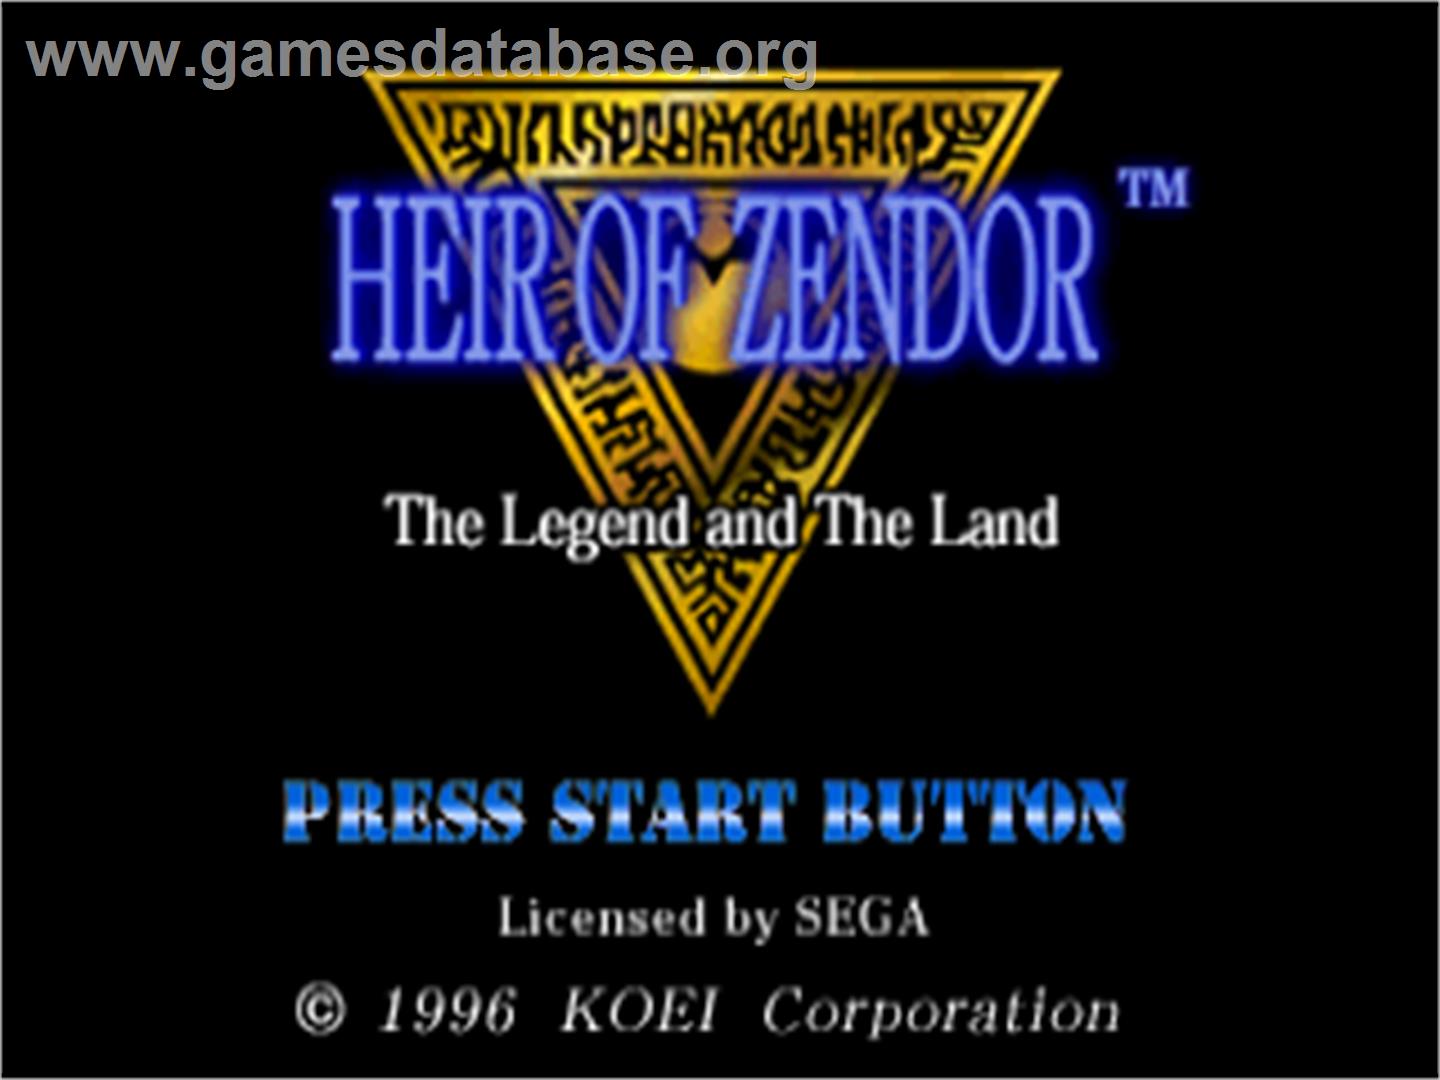 Heir of Zendor: The Legend and the Land - Sega Saturn - Artwork - Title Screen